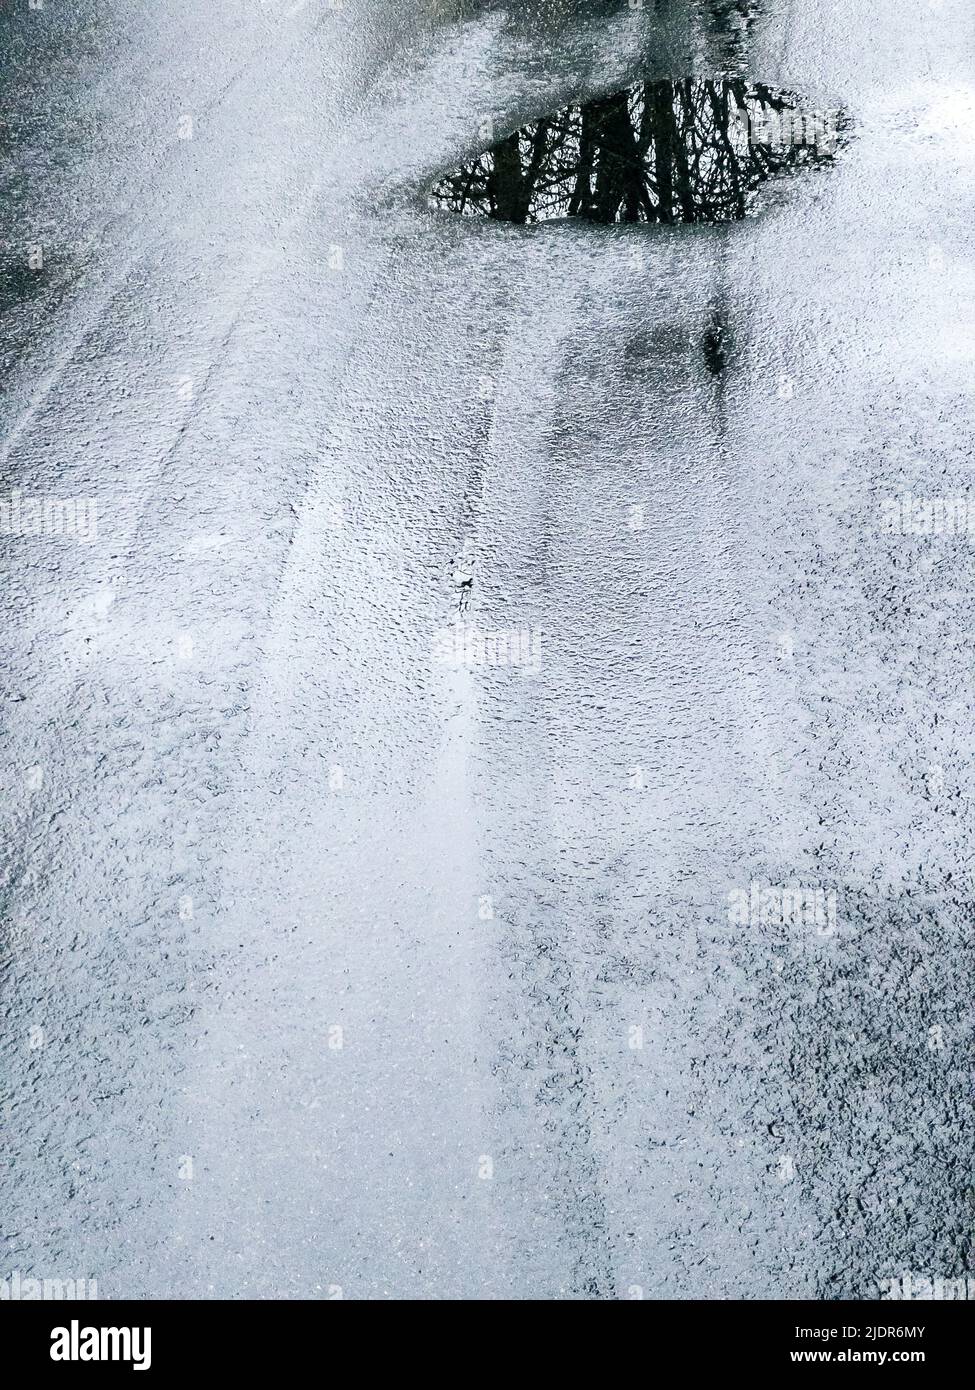 camino de asfalto húmedo con reflejos de árboles en charco de agua Foto de stock